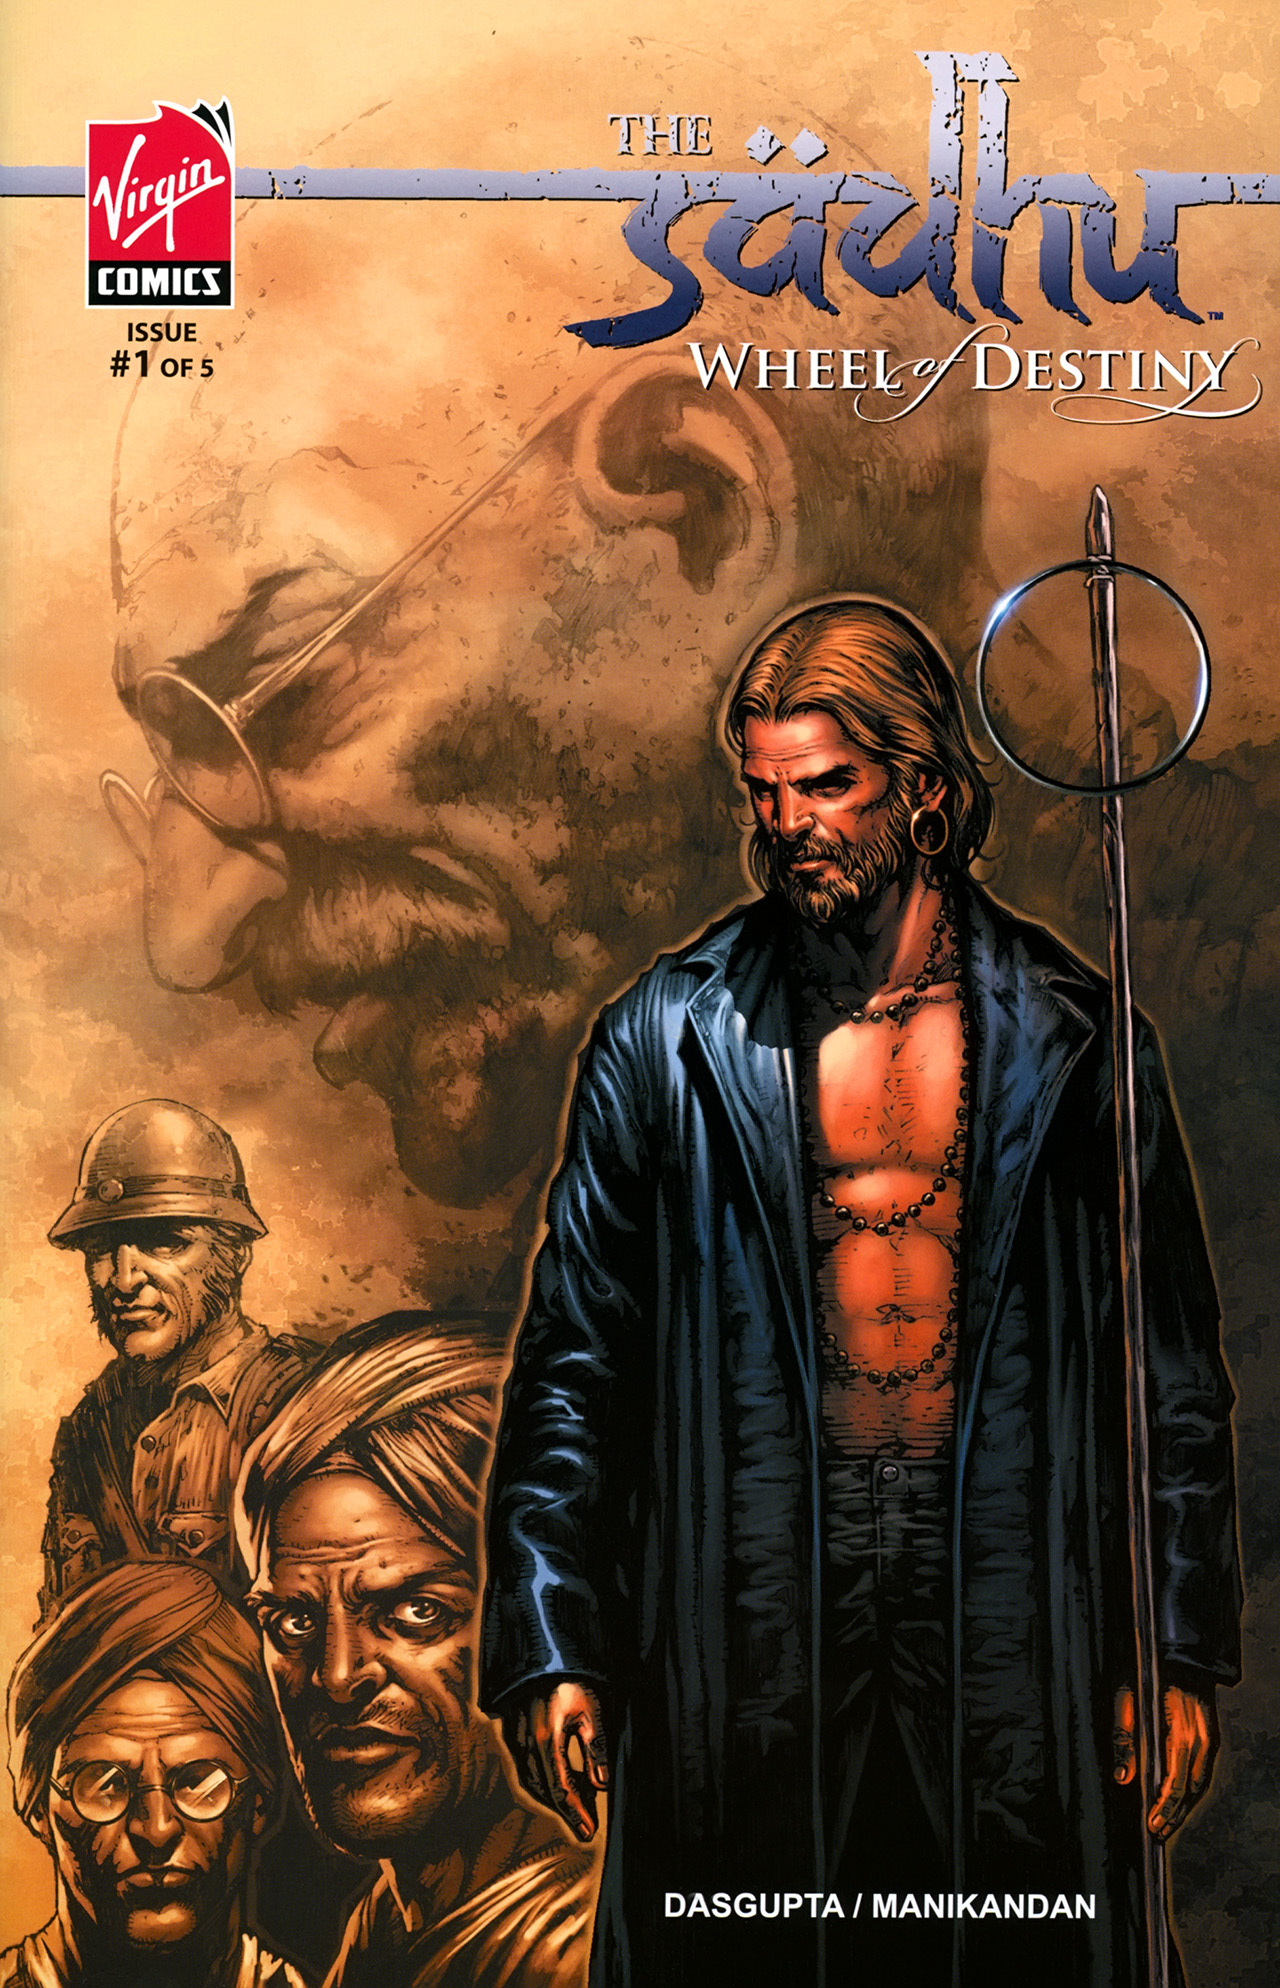 Read online Sädhu Wheel of Destiny comic -  Issue #1 - 1